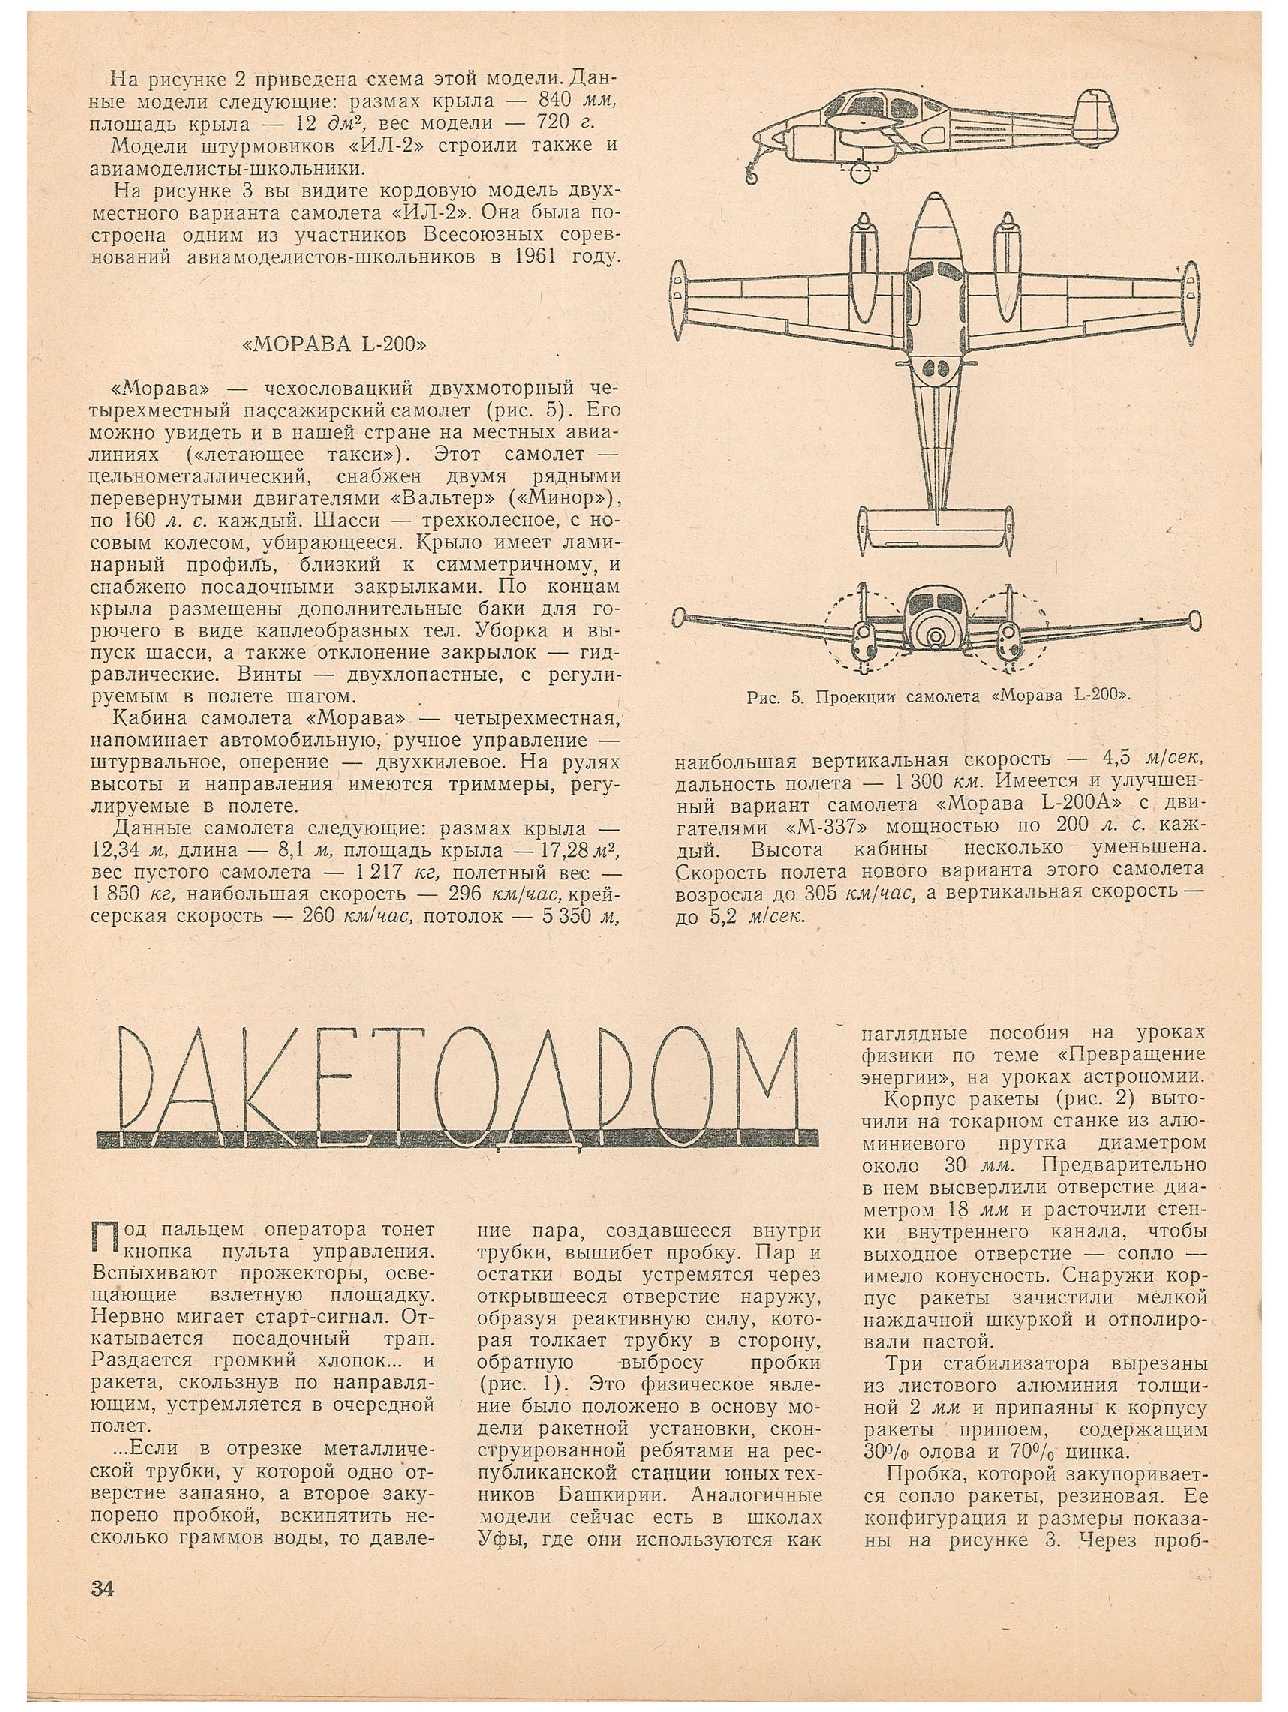 ЮМК 3, 1962, 34 c.